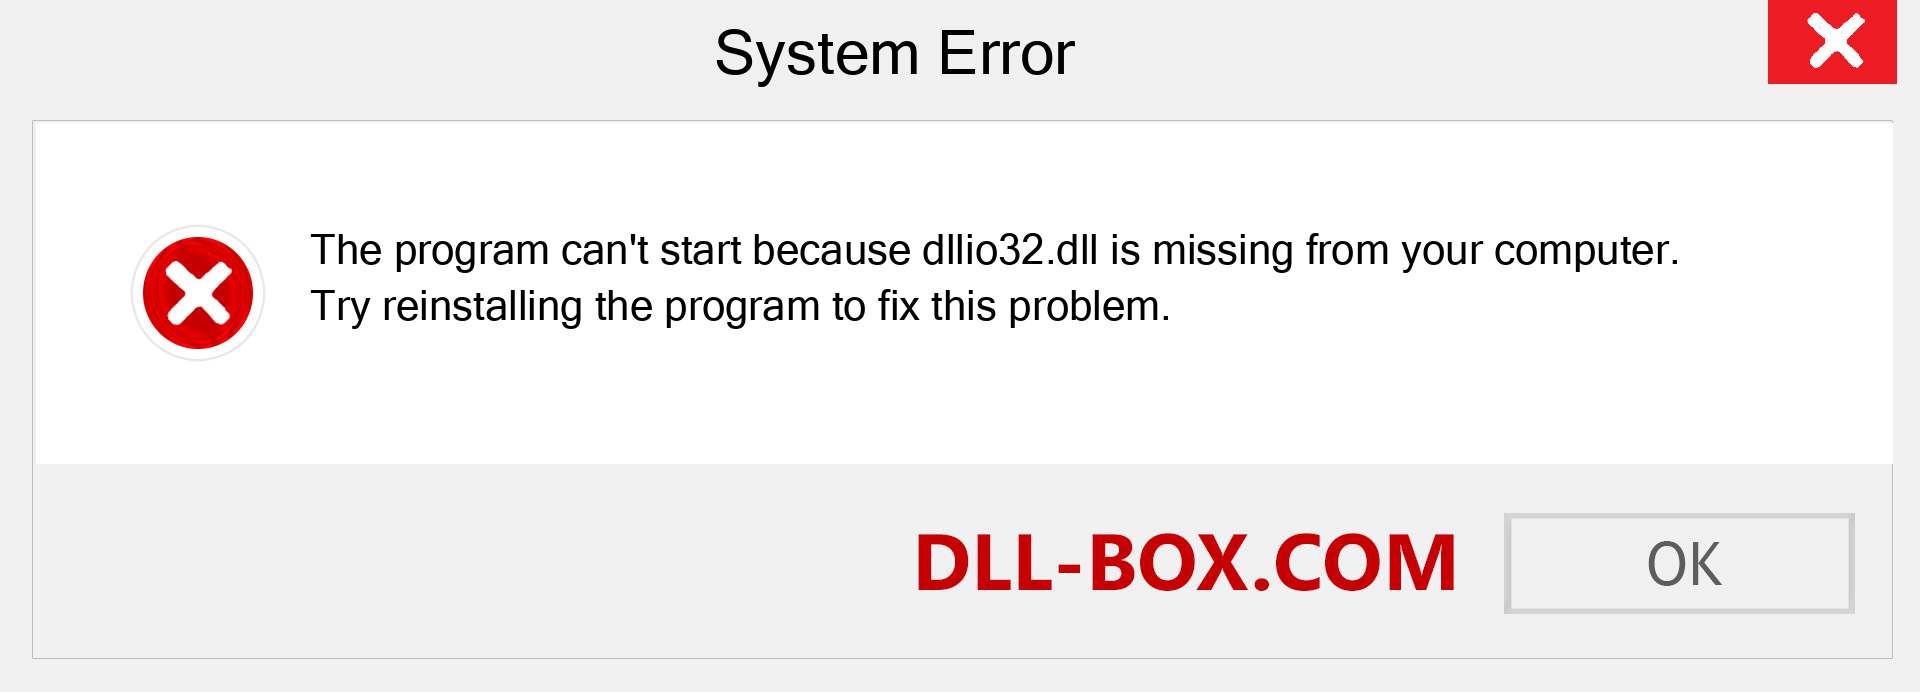  dllio32.dll file is missing?. Download for Windows 7, 8, 10 - Fix  dllio32 dll Missing Error on Windows, photos, images